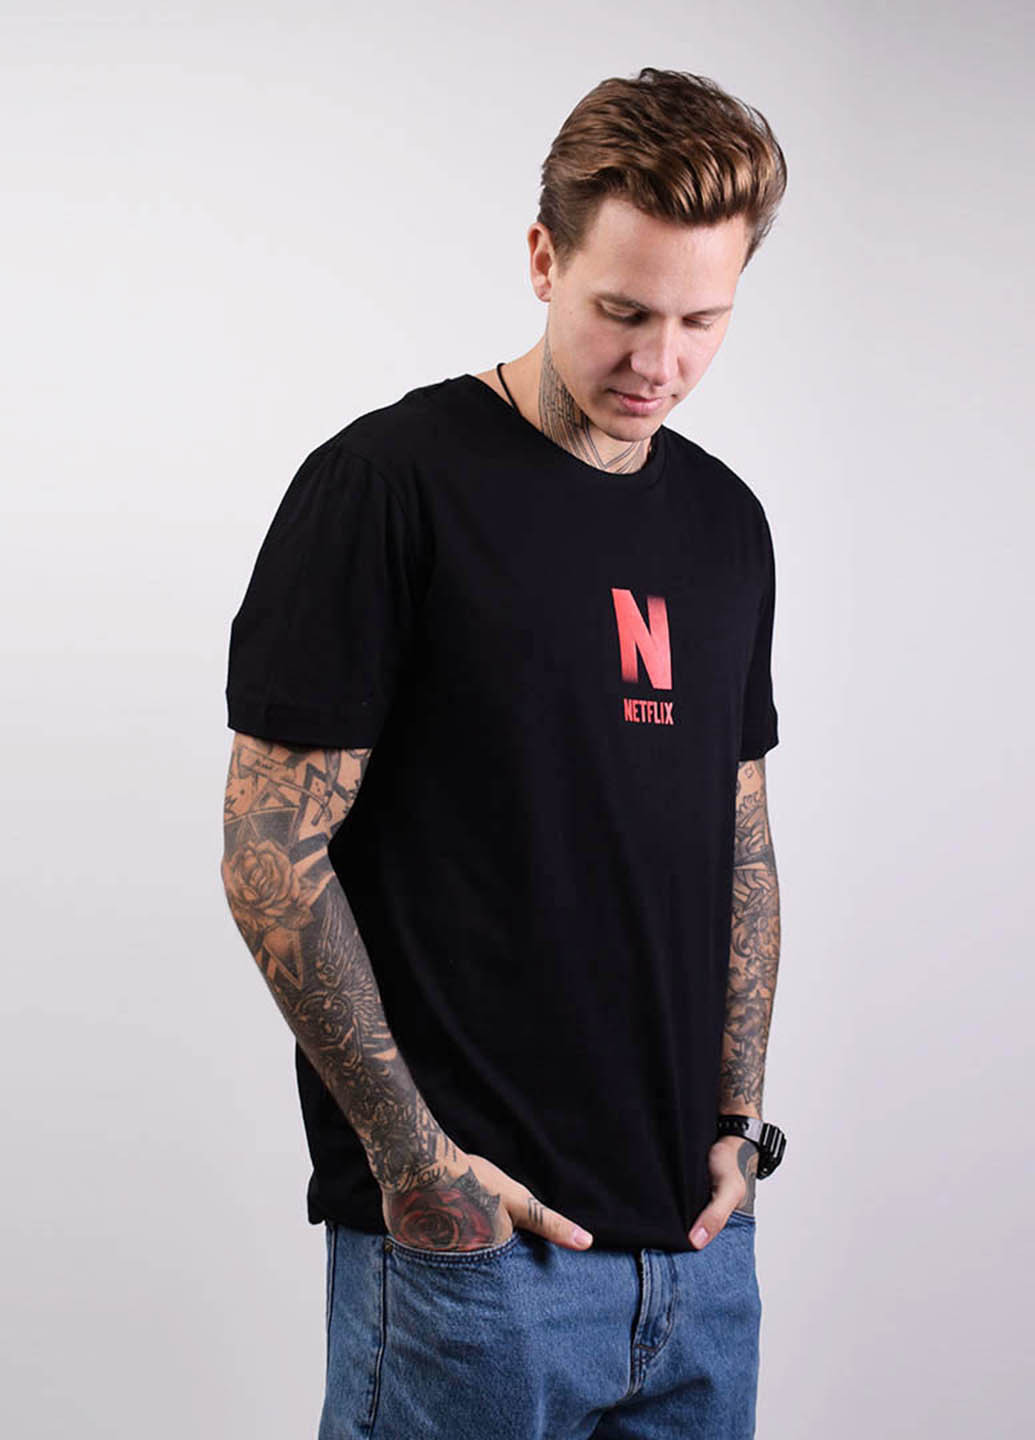 Чорна футболка чоловіча n-1netflix чорний Power Футболки